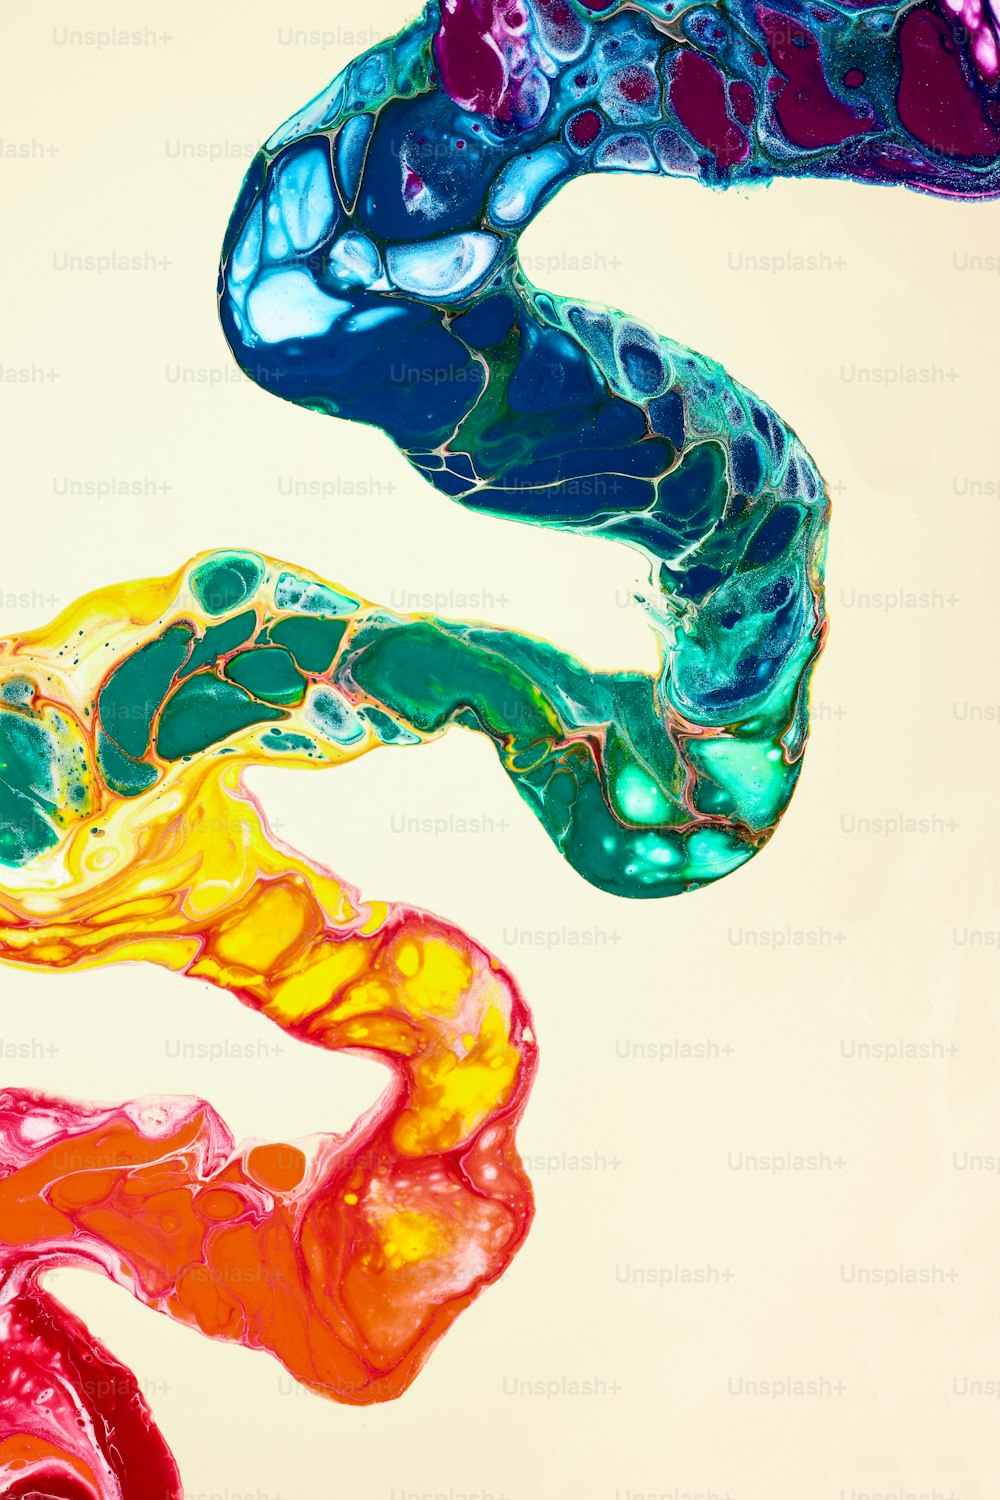 Una pintura abstracta de diferentes colores de líquido